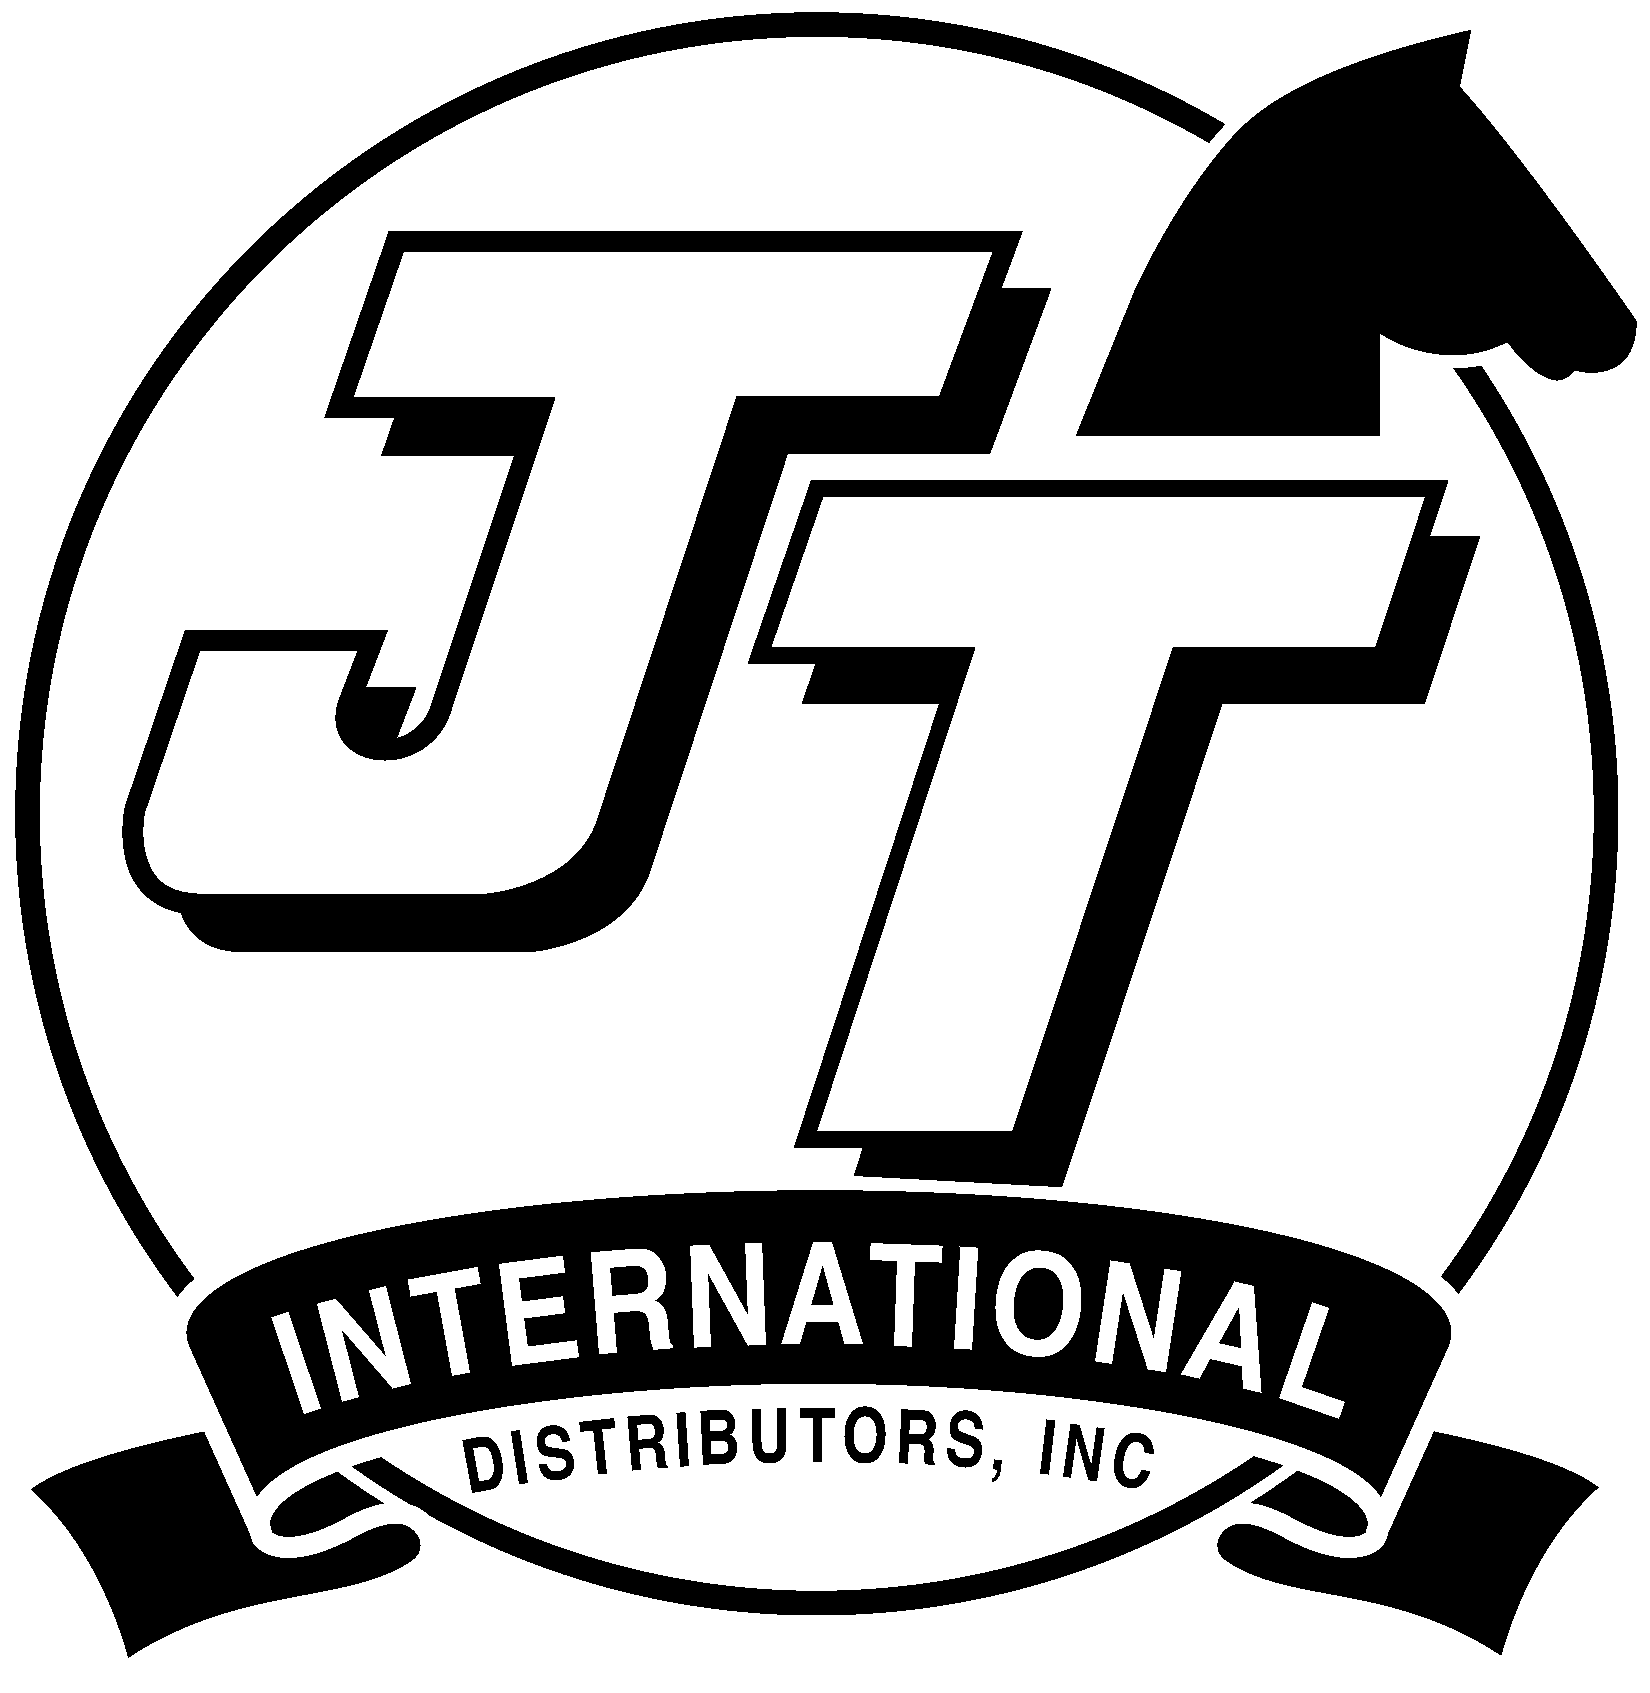  JT INTERNATIONAL DISTRIBUTORS, INC